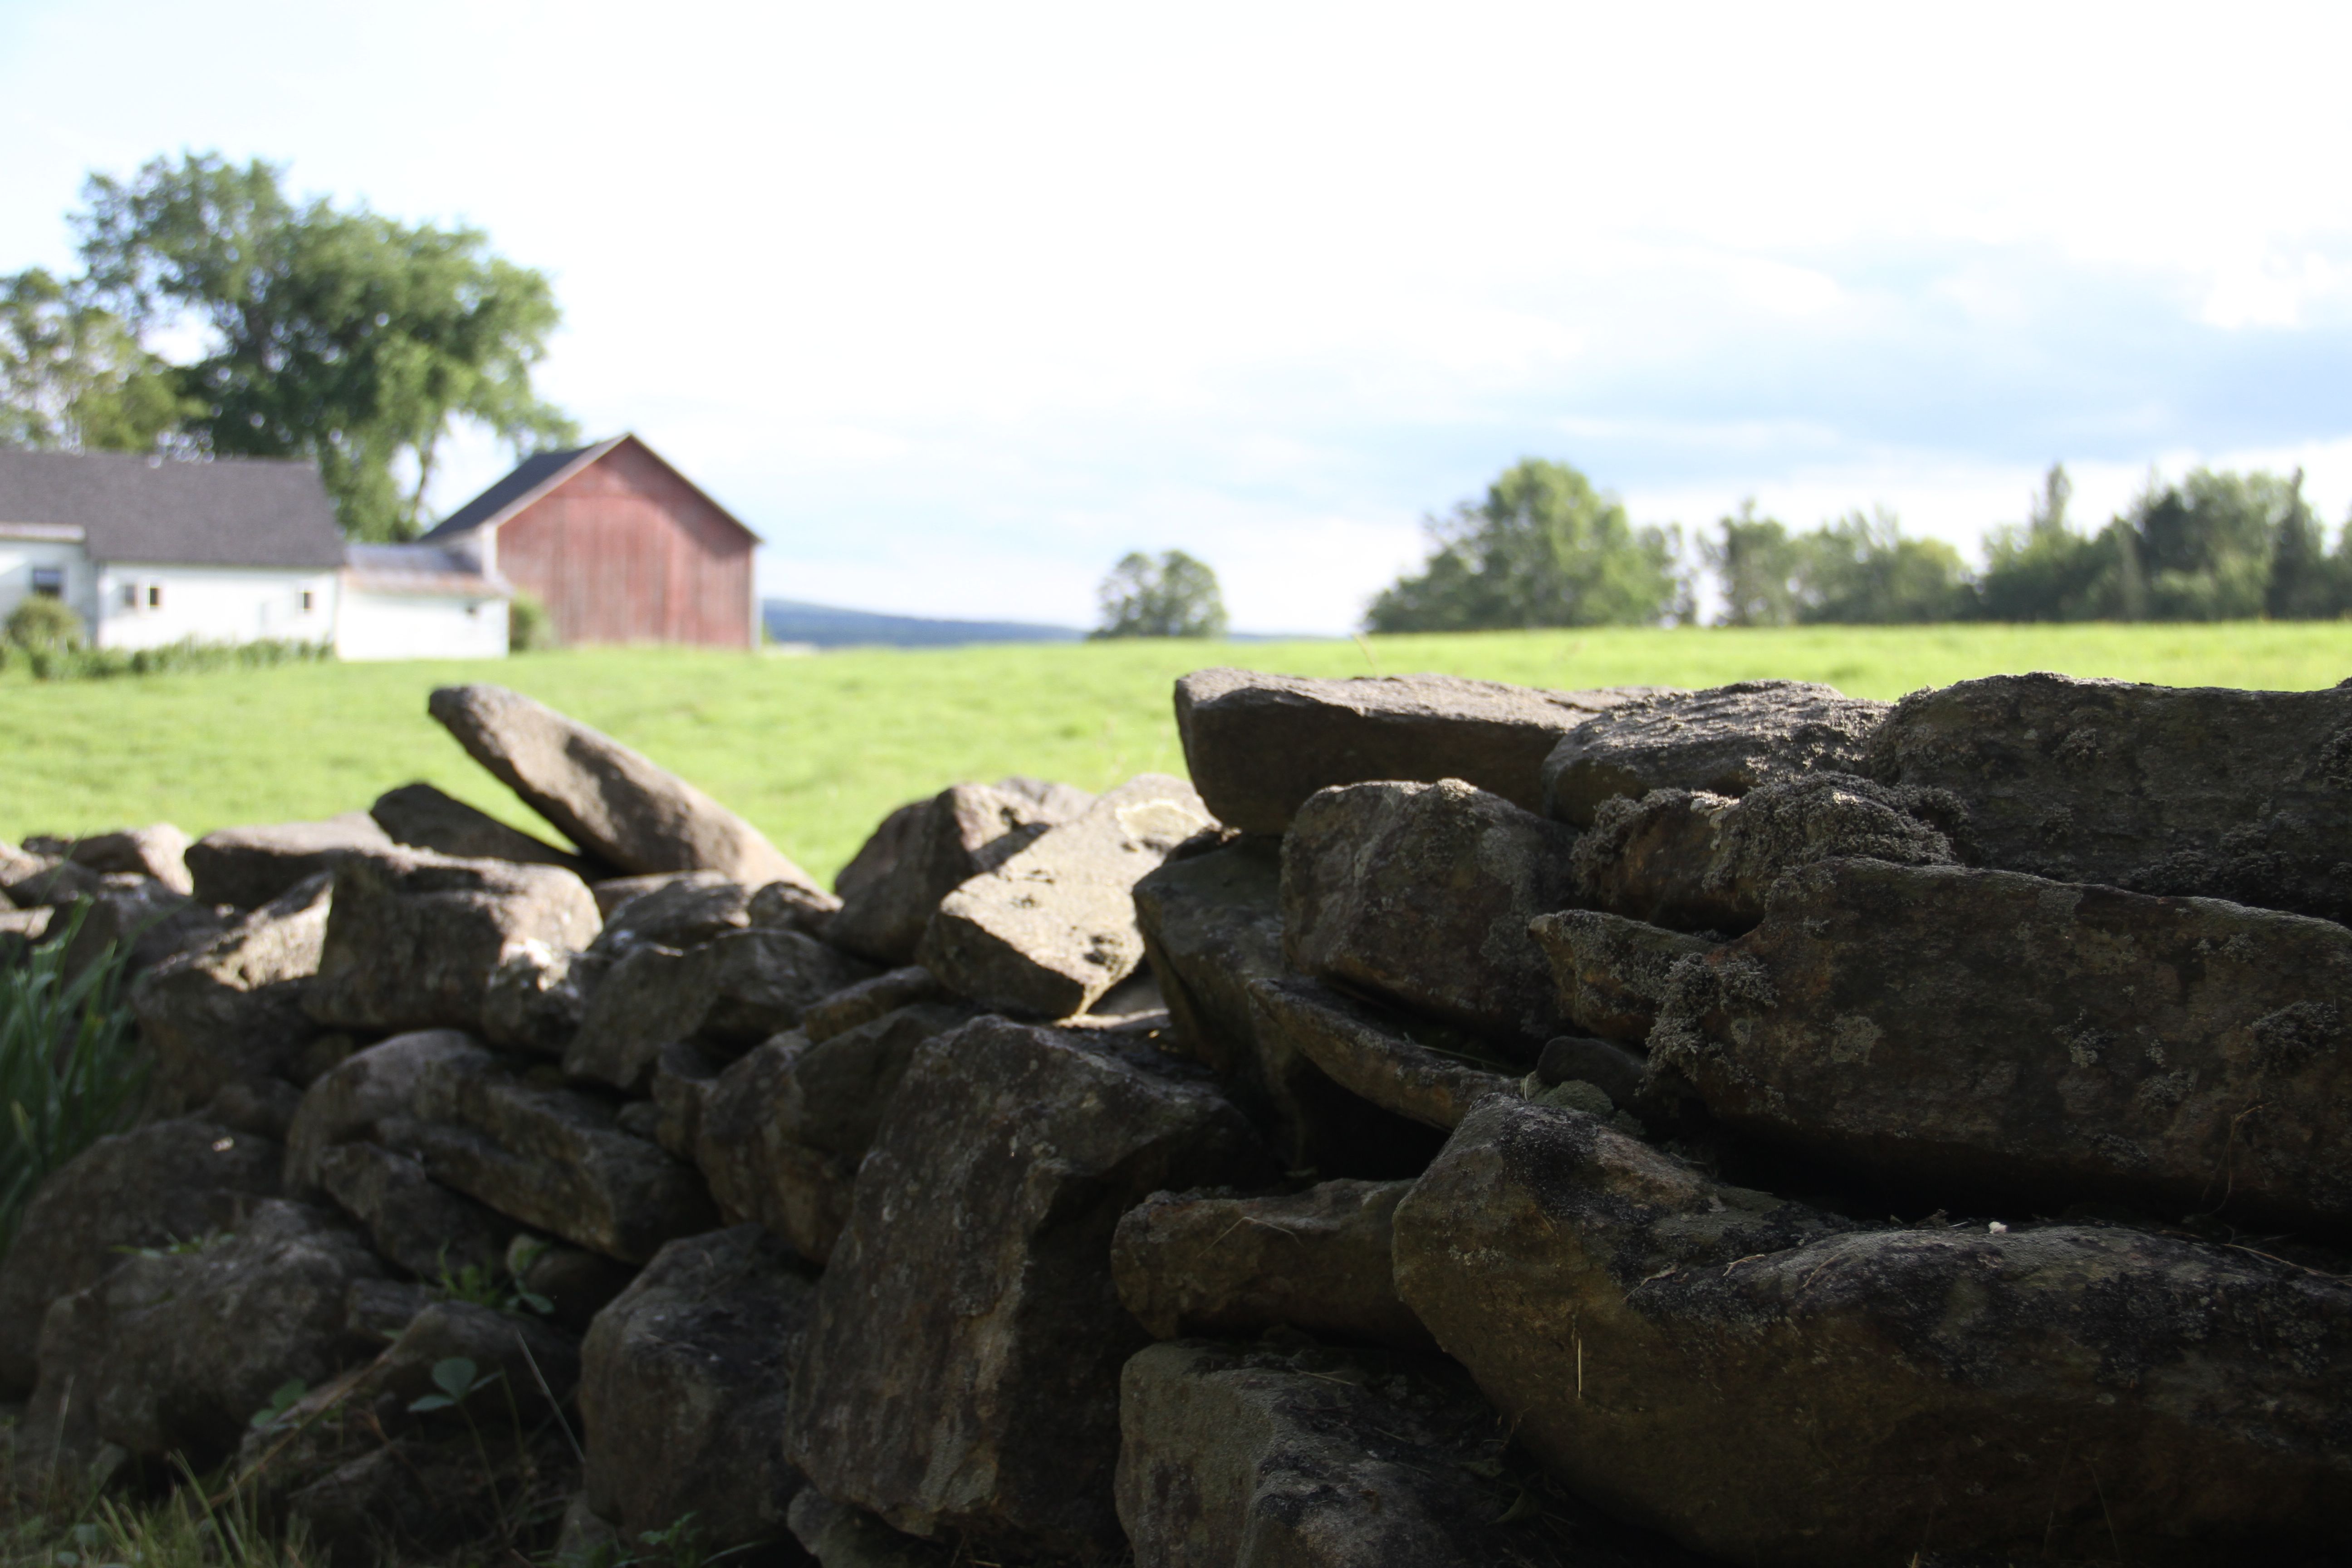 A New Englander's dream: farmhouse, stone wall, field, mountains, trees... ahhh.